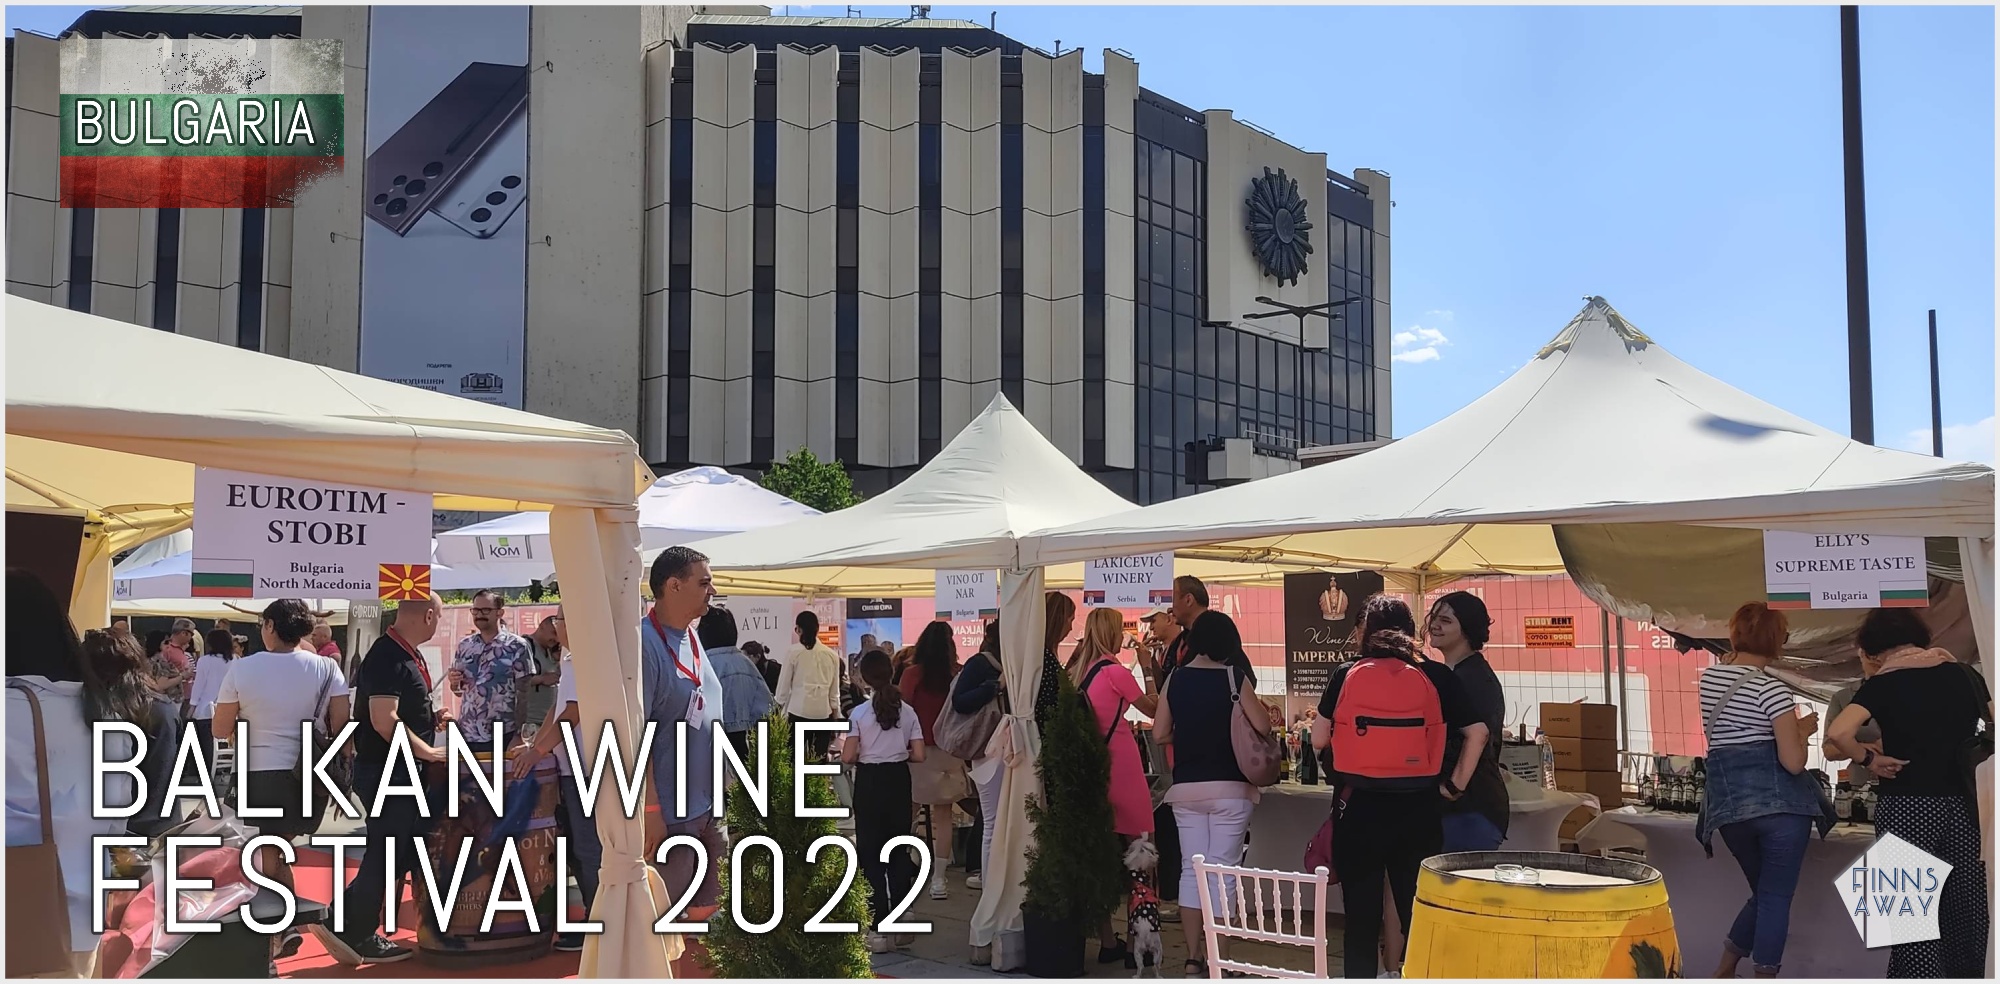 Balkan Wine Festival 2022 in Sofia, Bulgaria | FinnsAway Travels